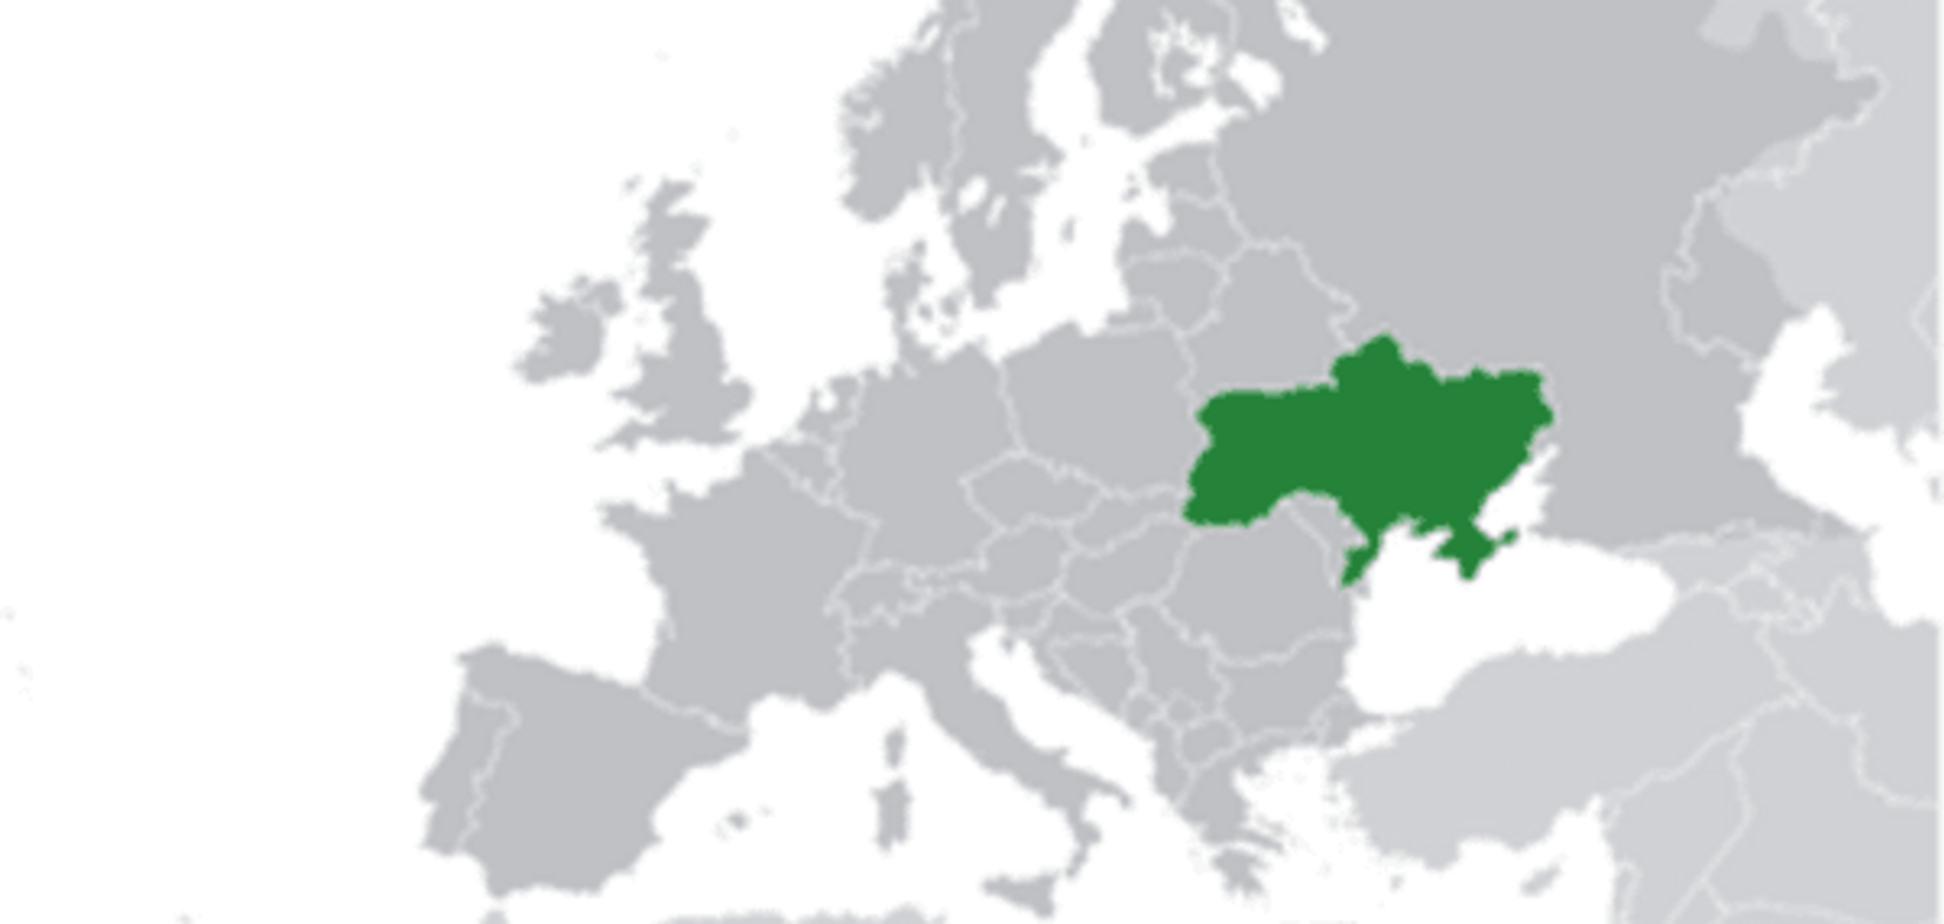 Украина на карте мира